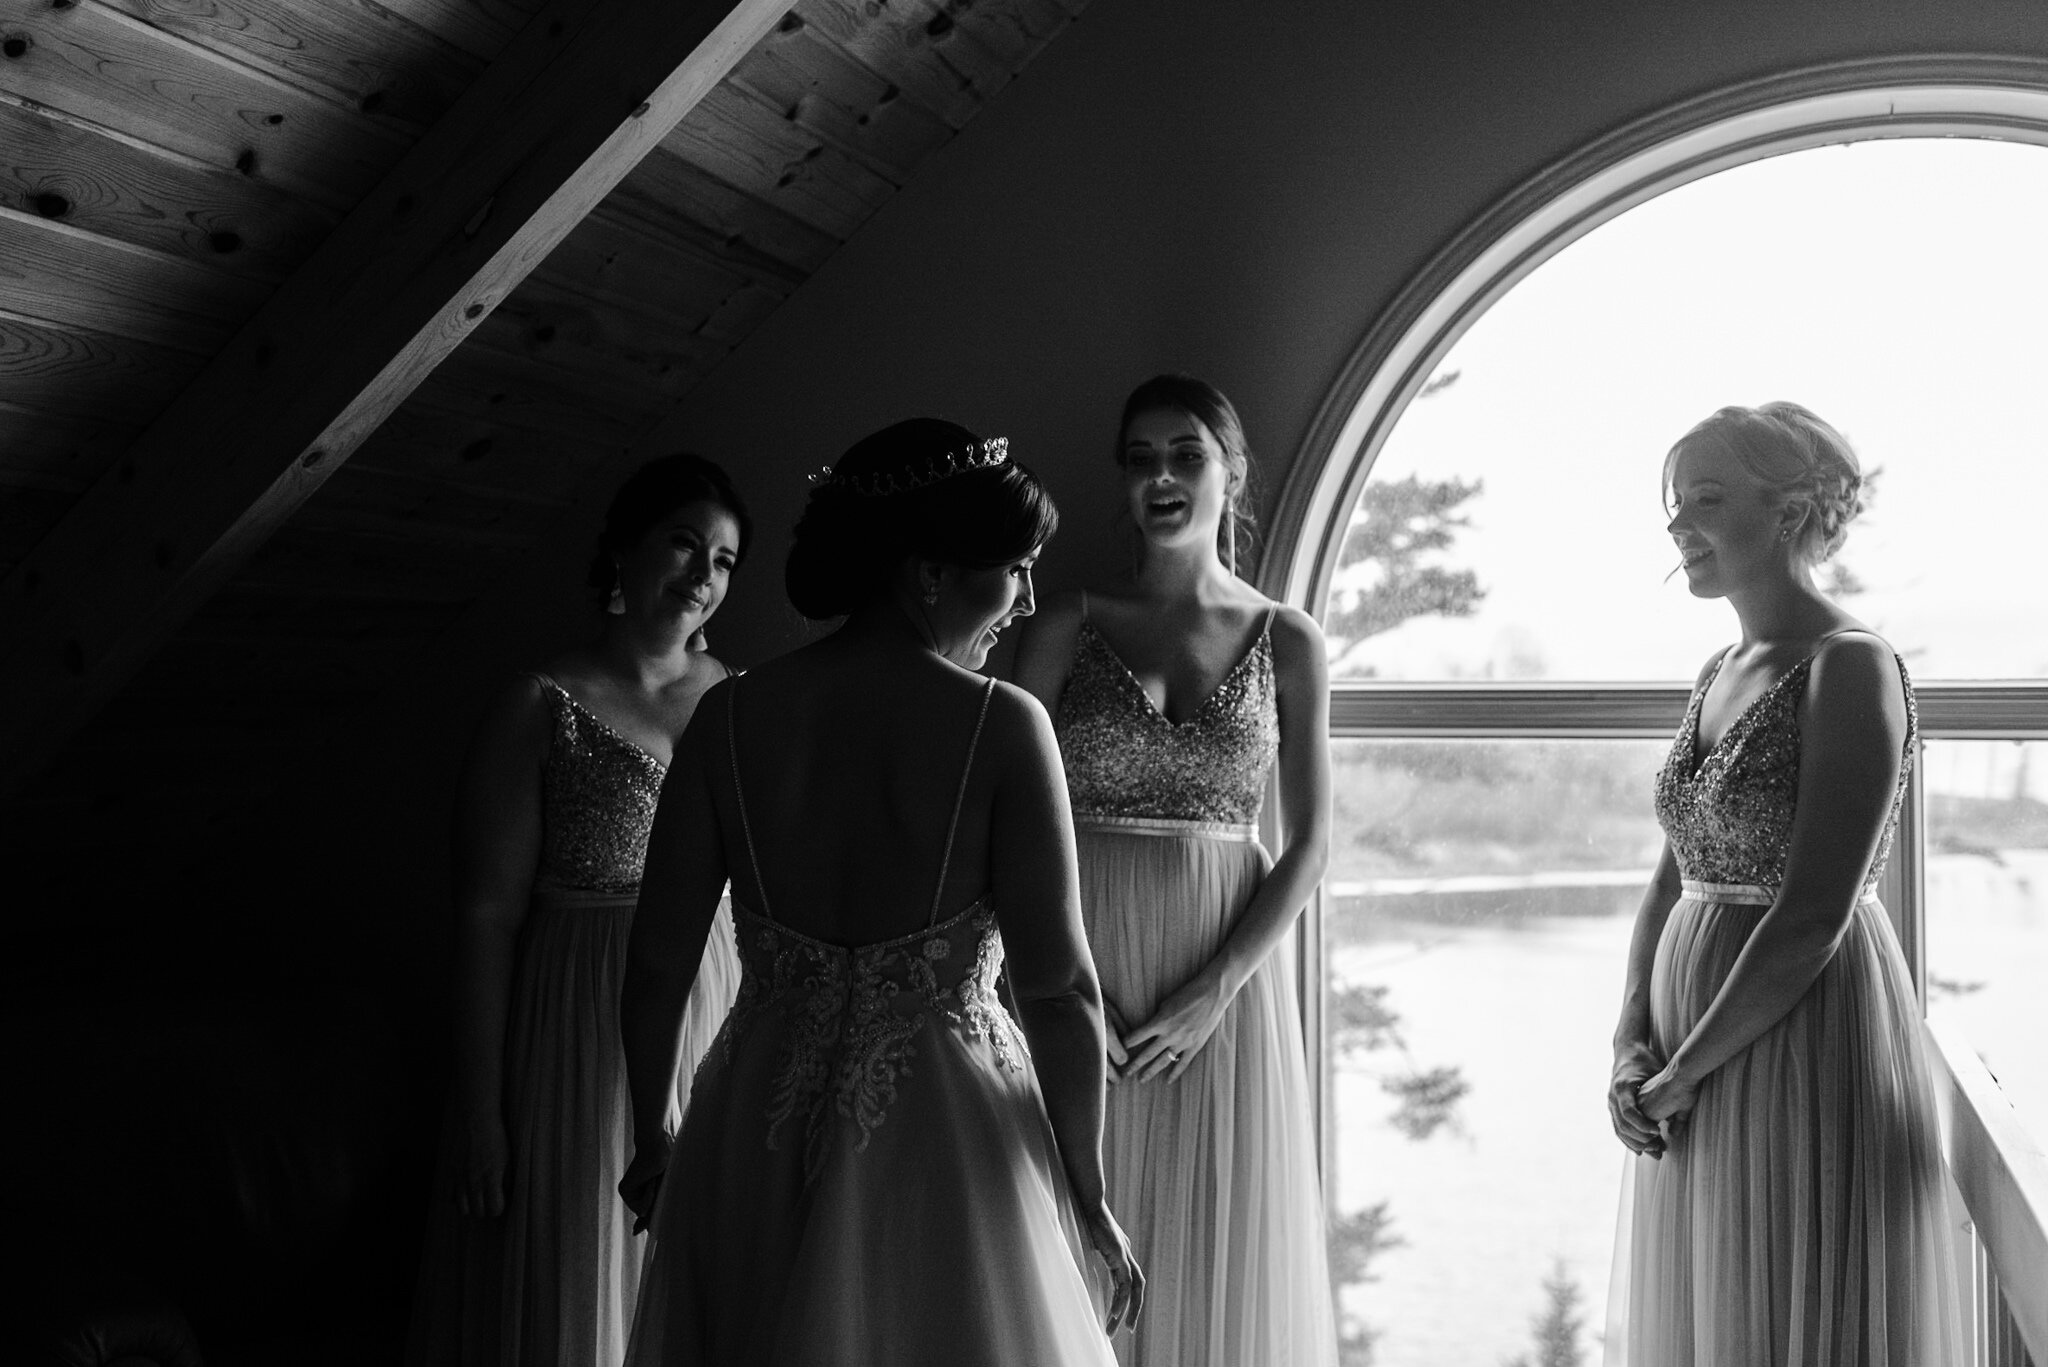 327-bridesmaids-reactions-brides-dress-crown-emotional-storytelling-winter-wedding-ontario-toronto.jpg